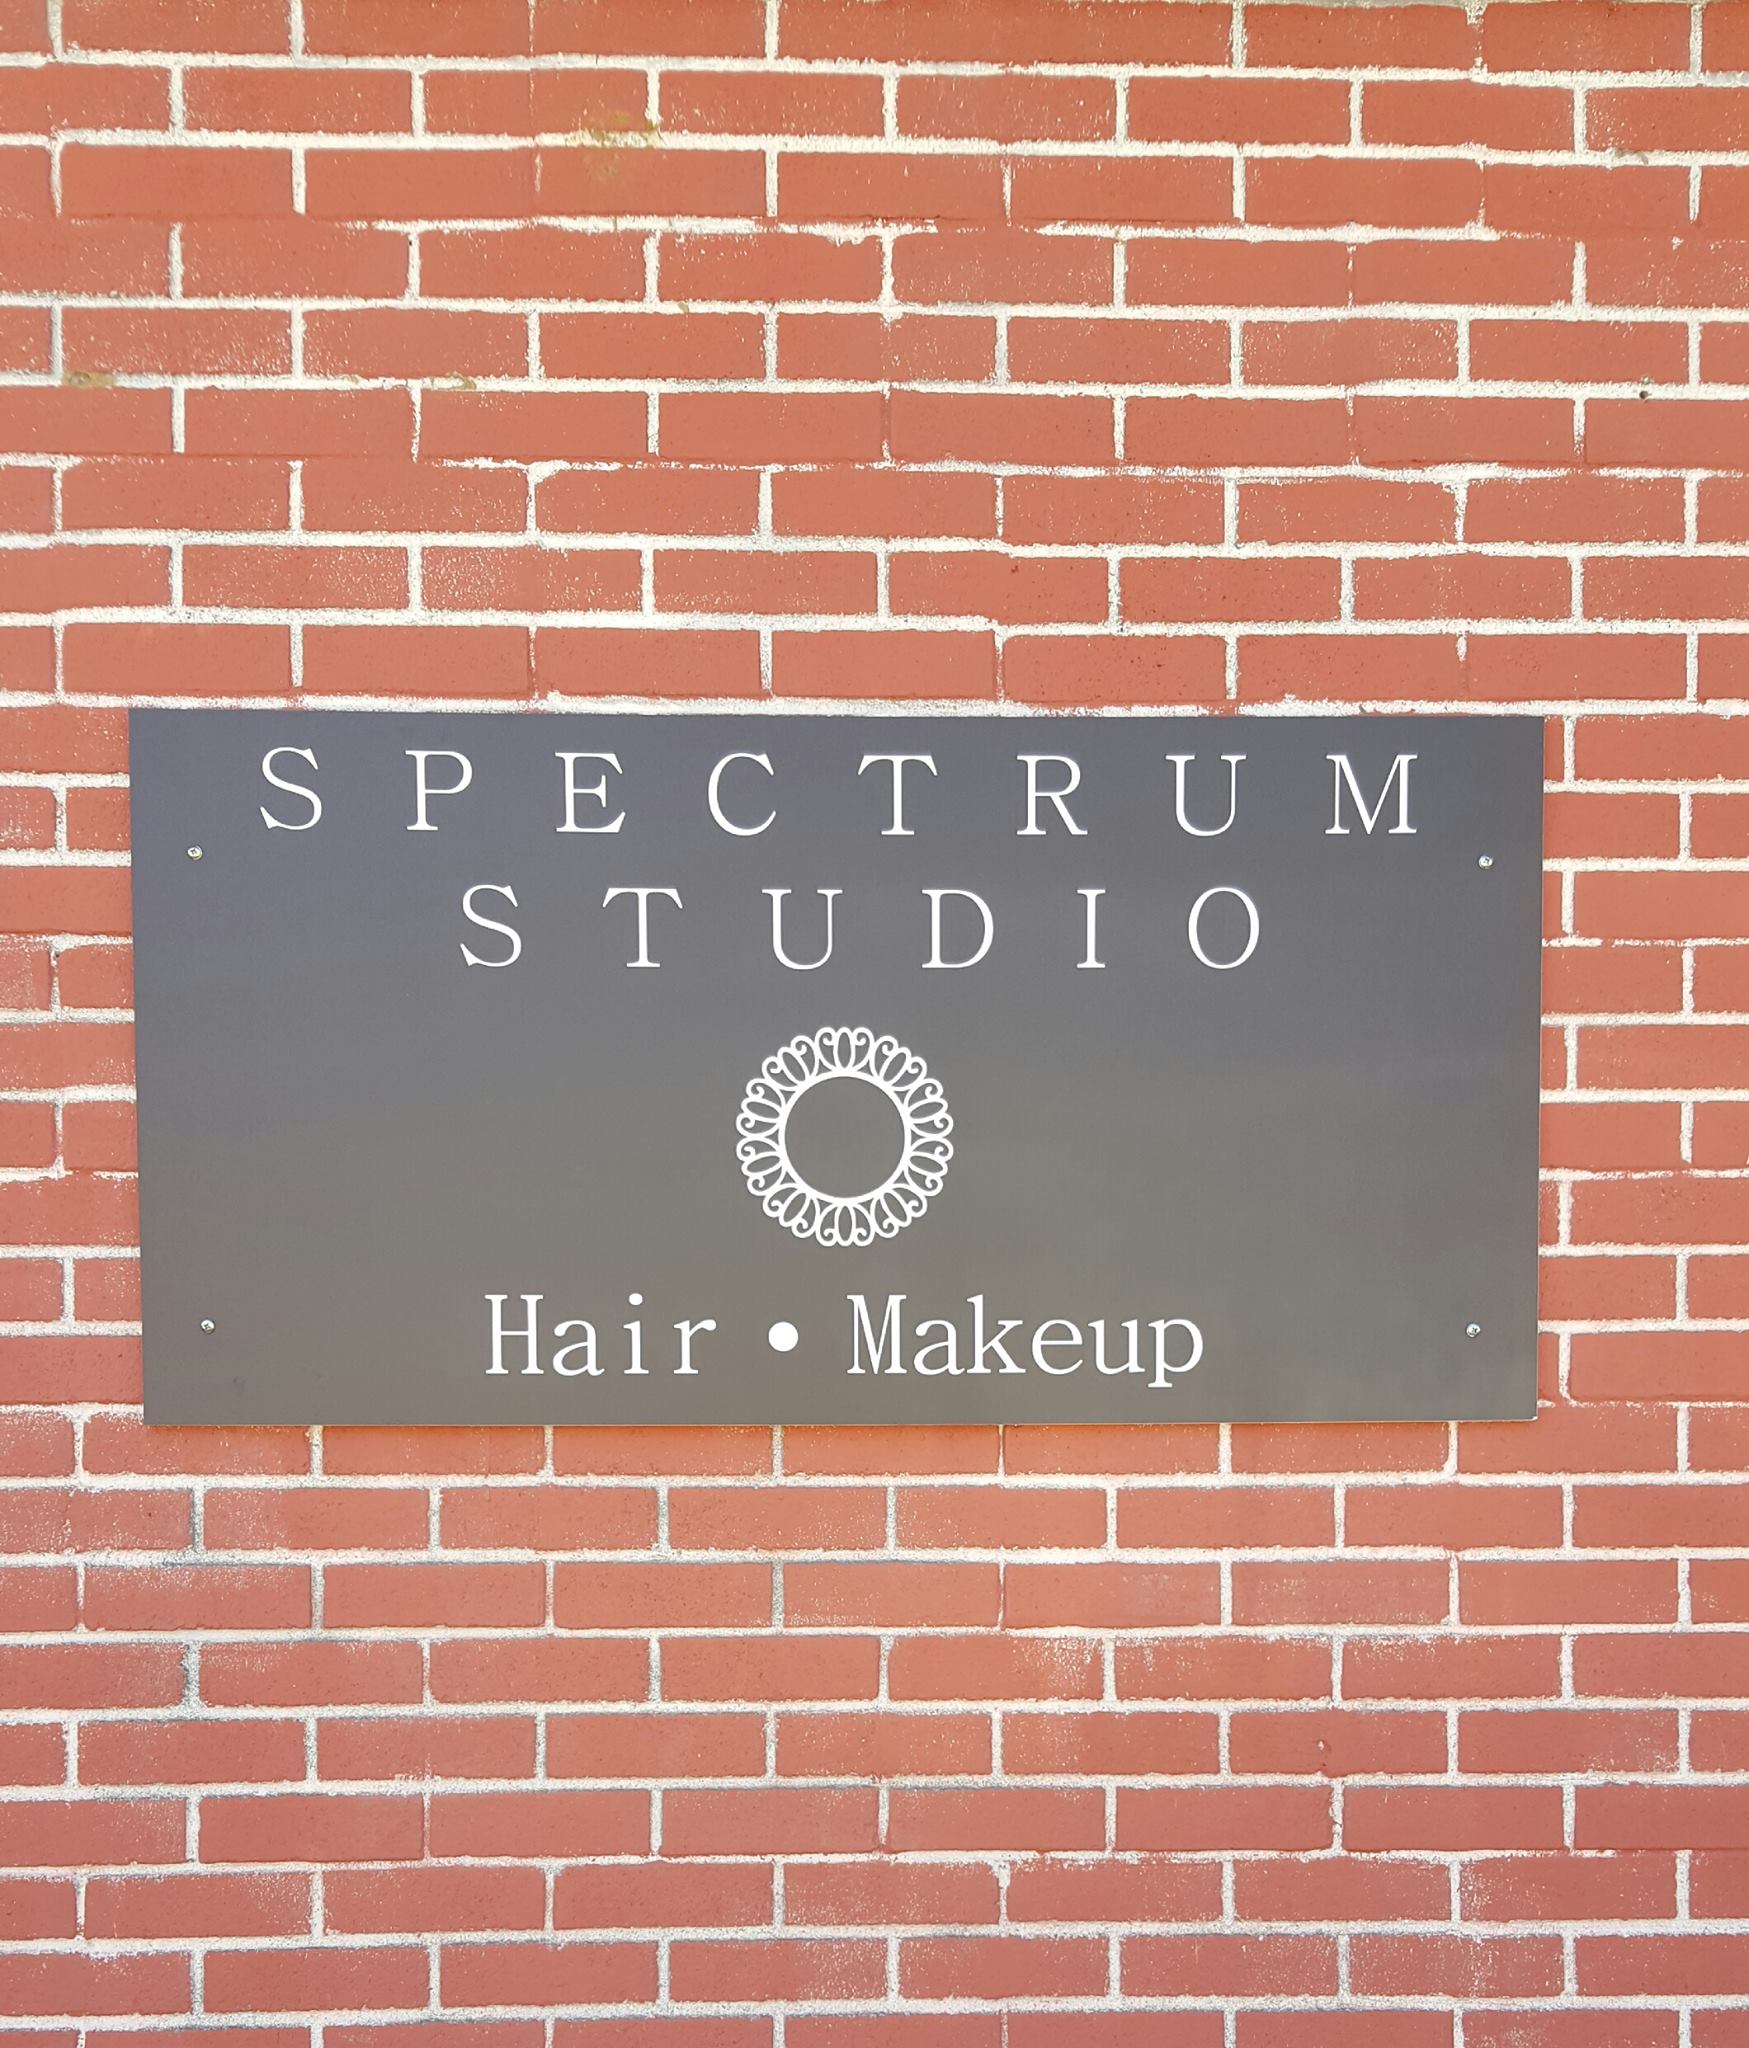 Spectrum Studio 50 High St, Wakefield Rhode Island 02879